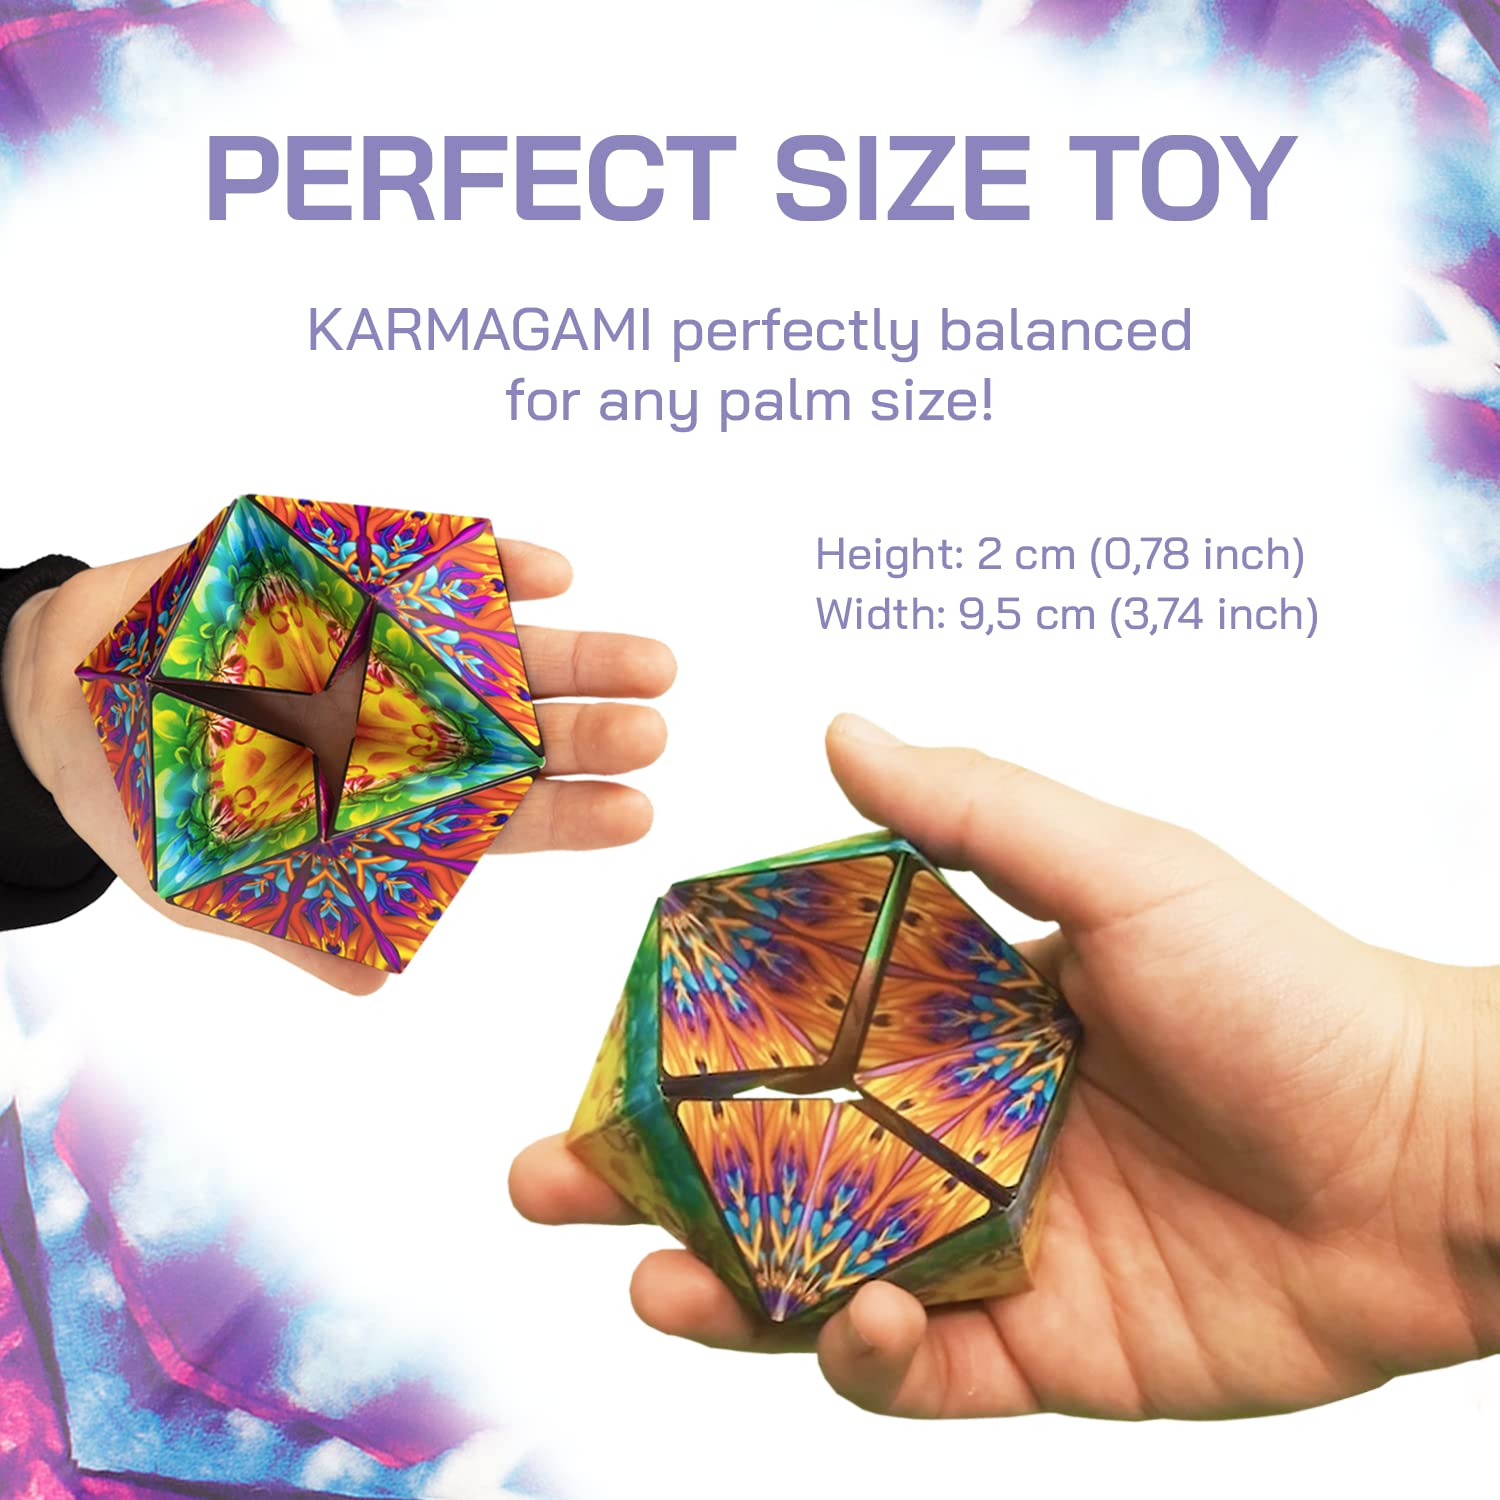 Karmagami fidget toy